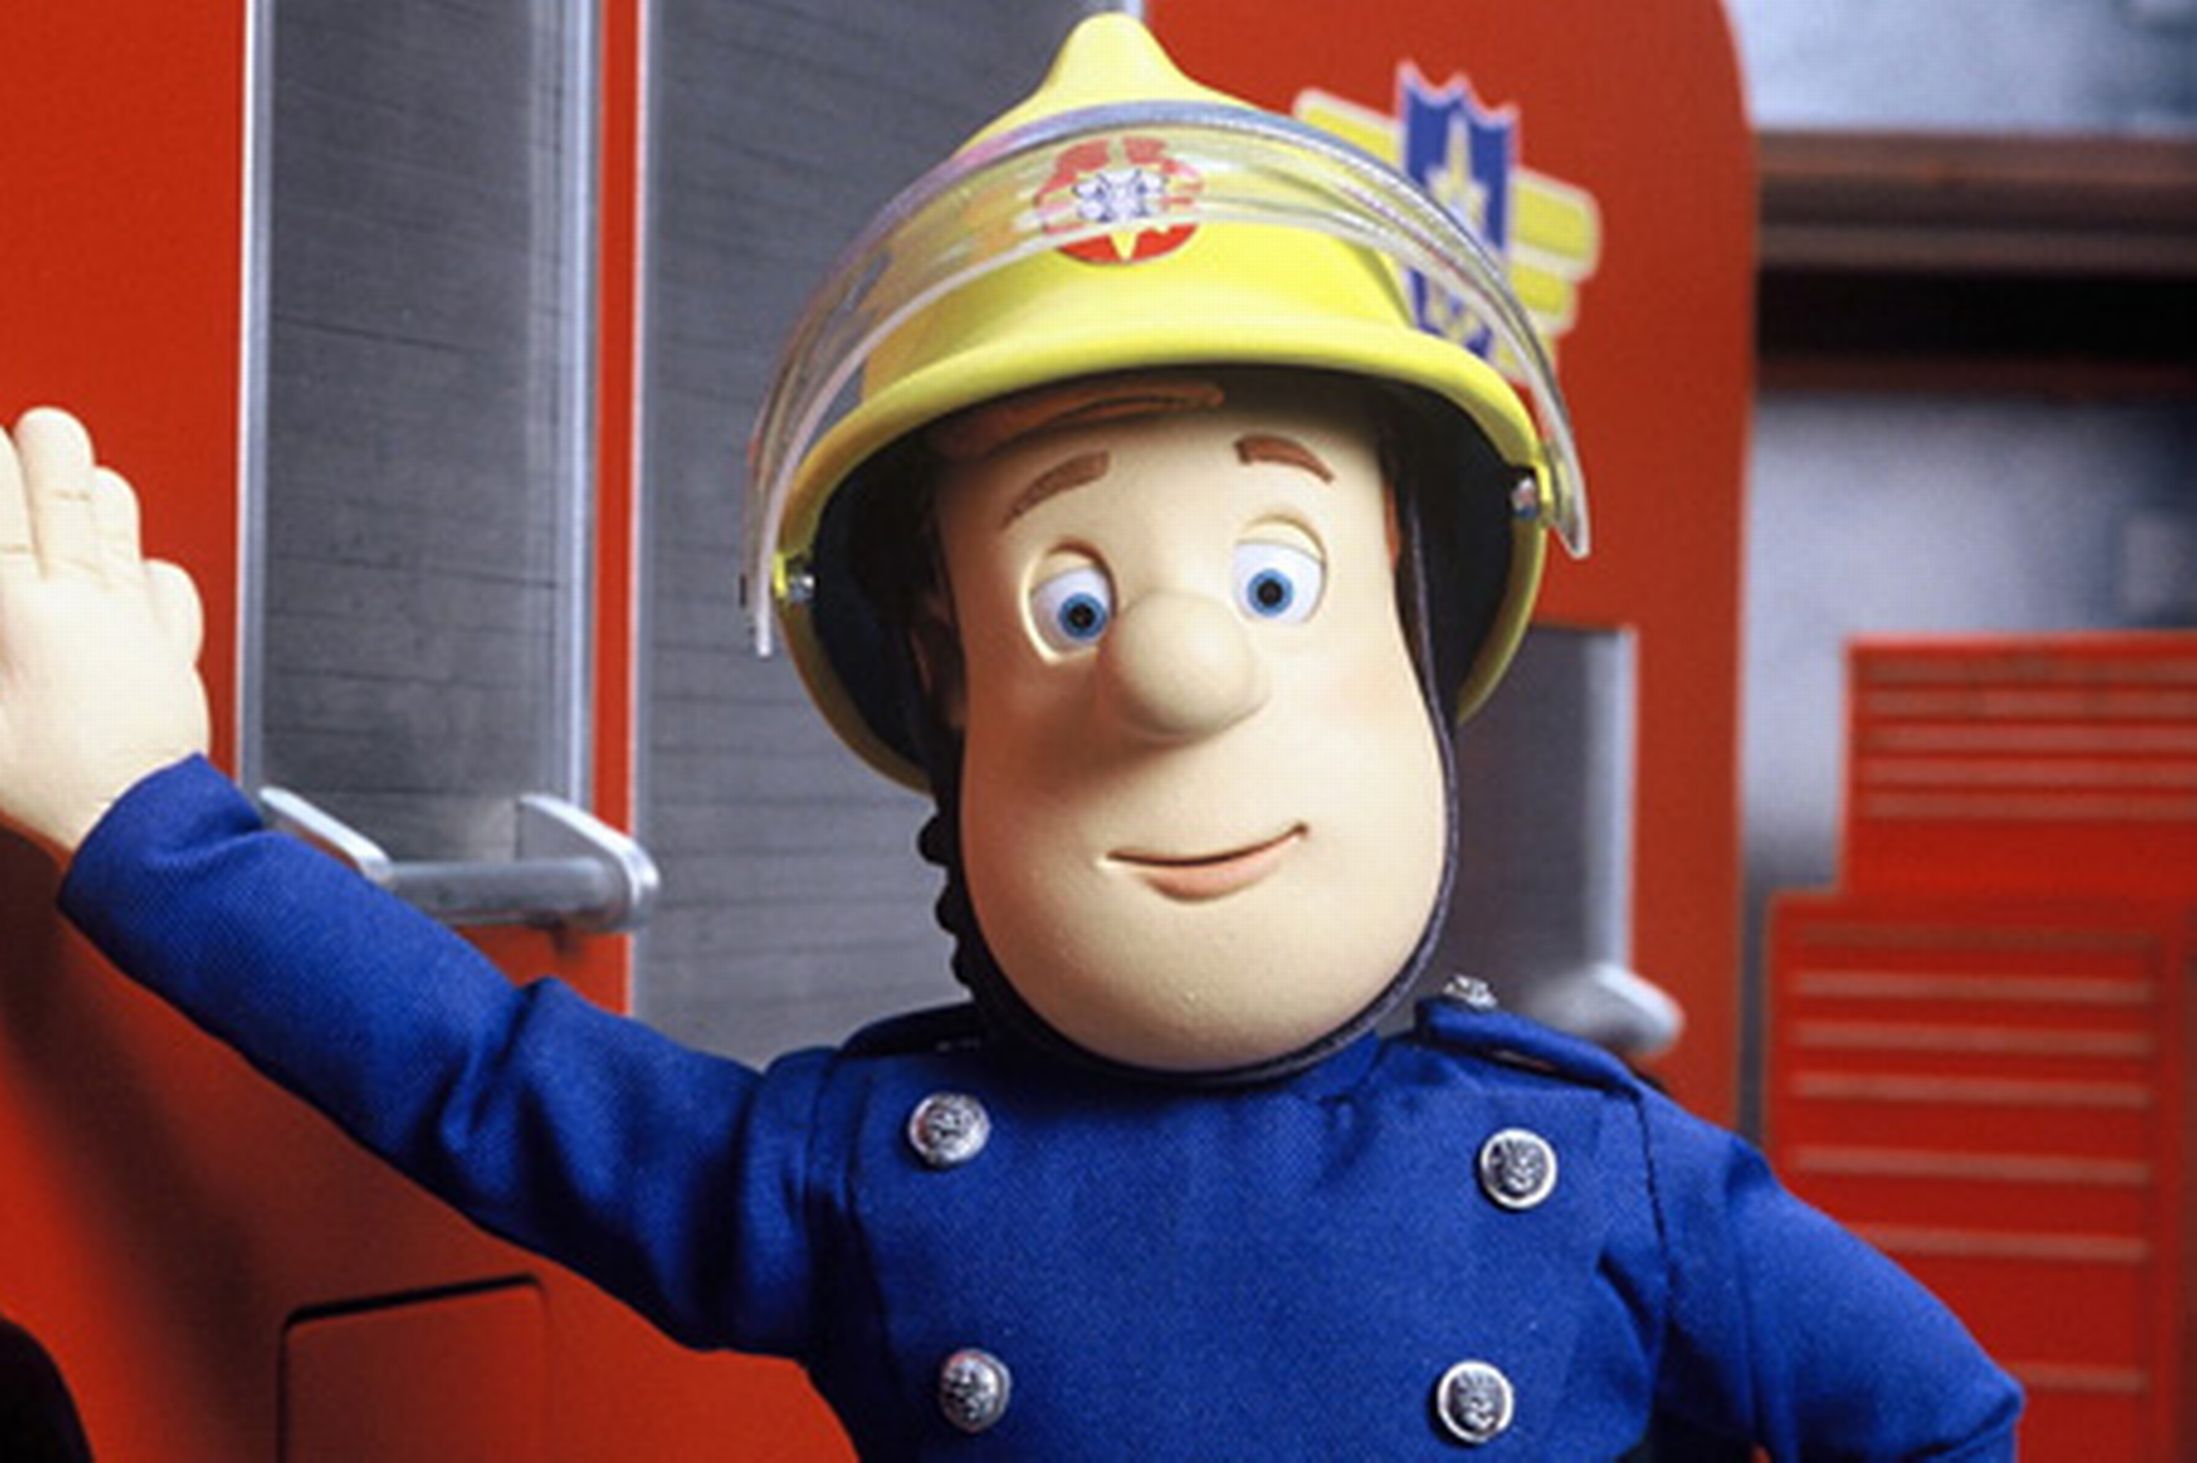 Fireman Sam comes to Brockwell Park fireworks on November 5